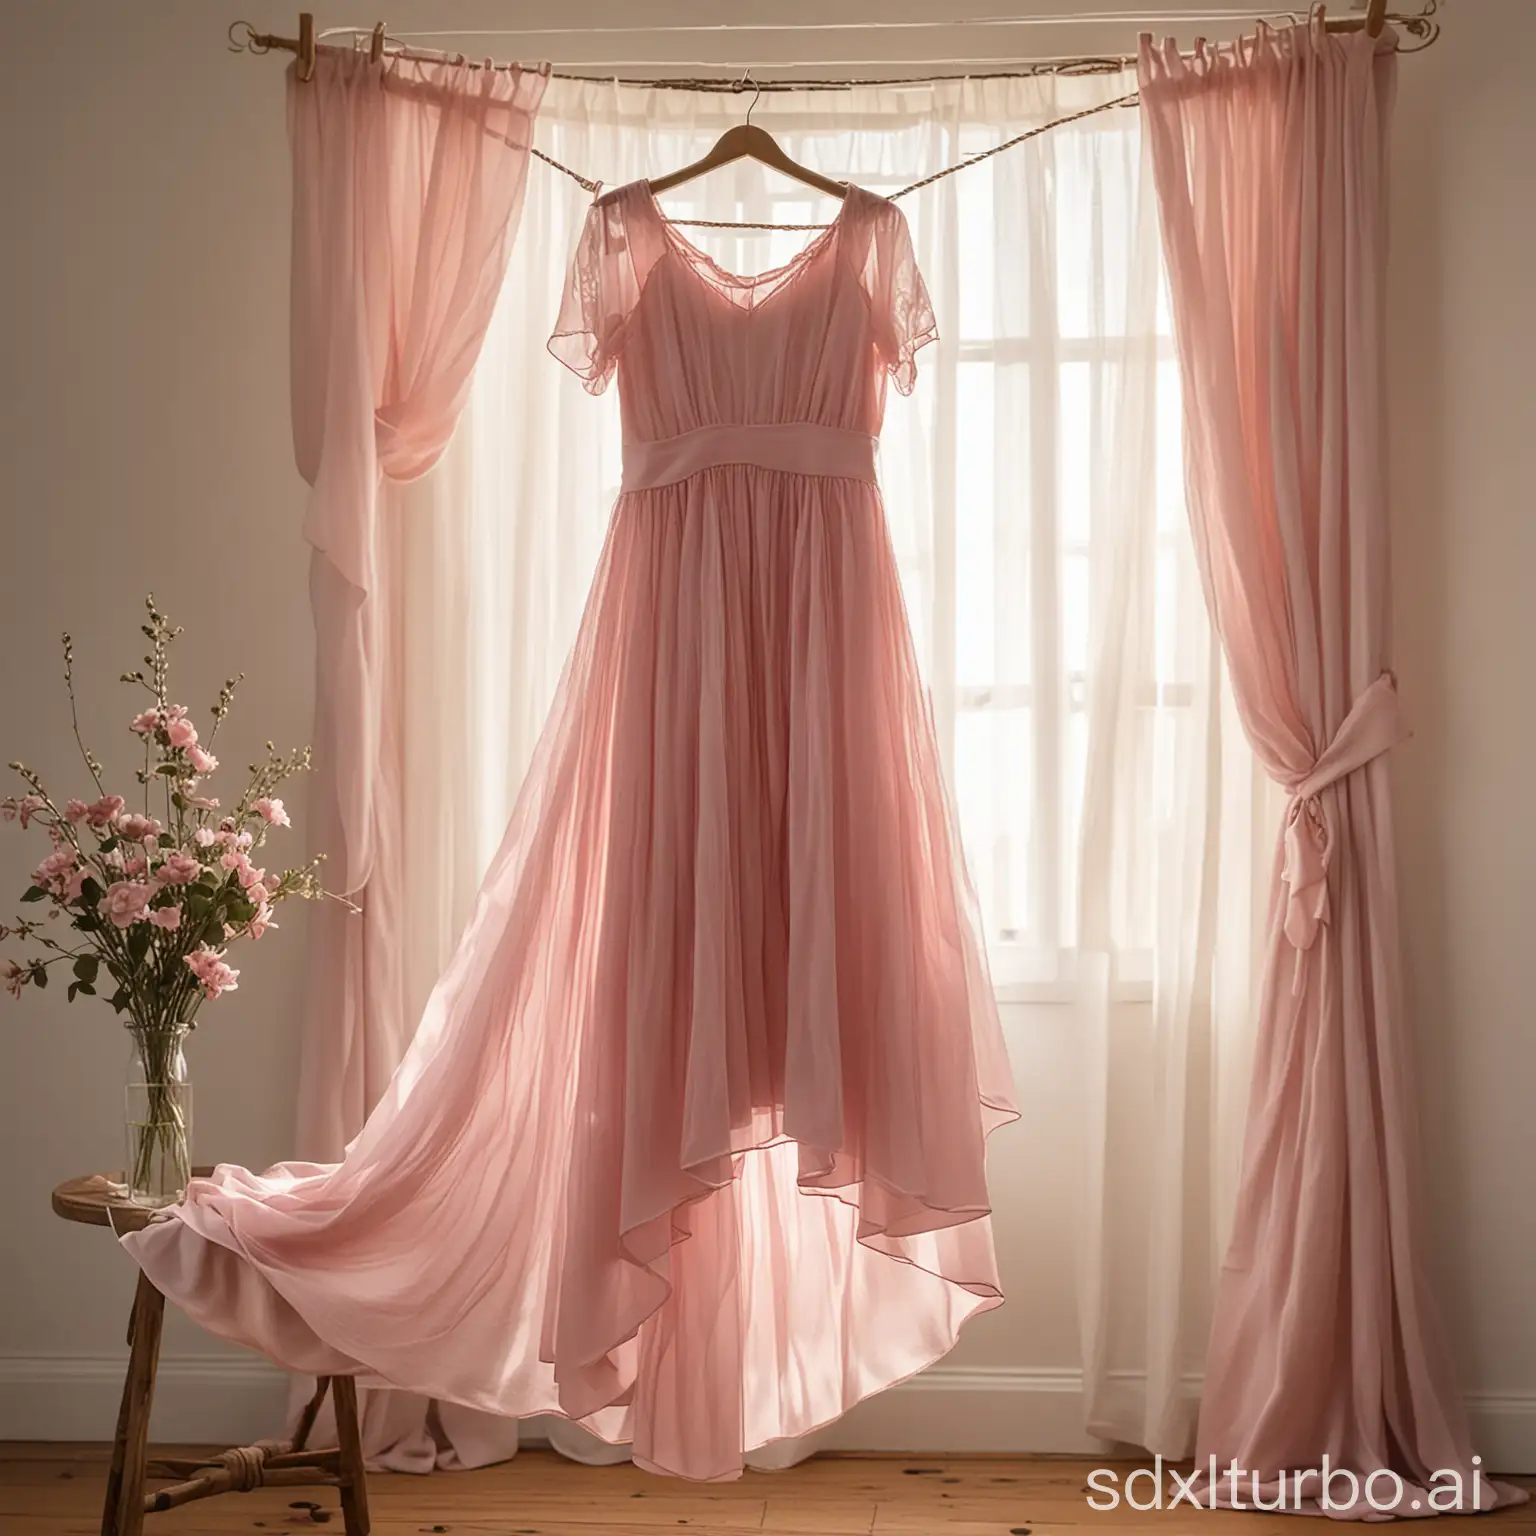 Ethereal-Pink-Dress-Hanging-on-Clothesline